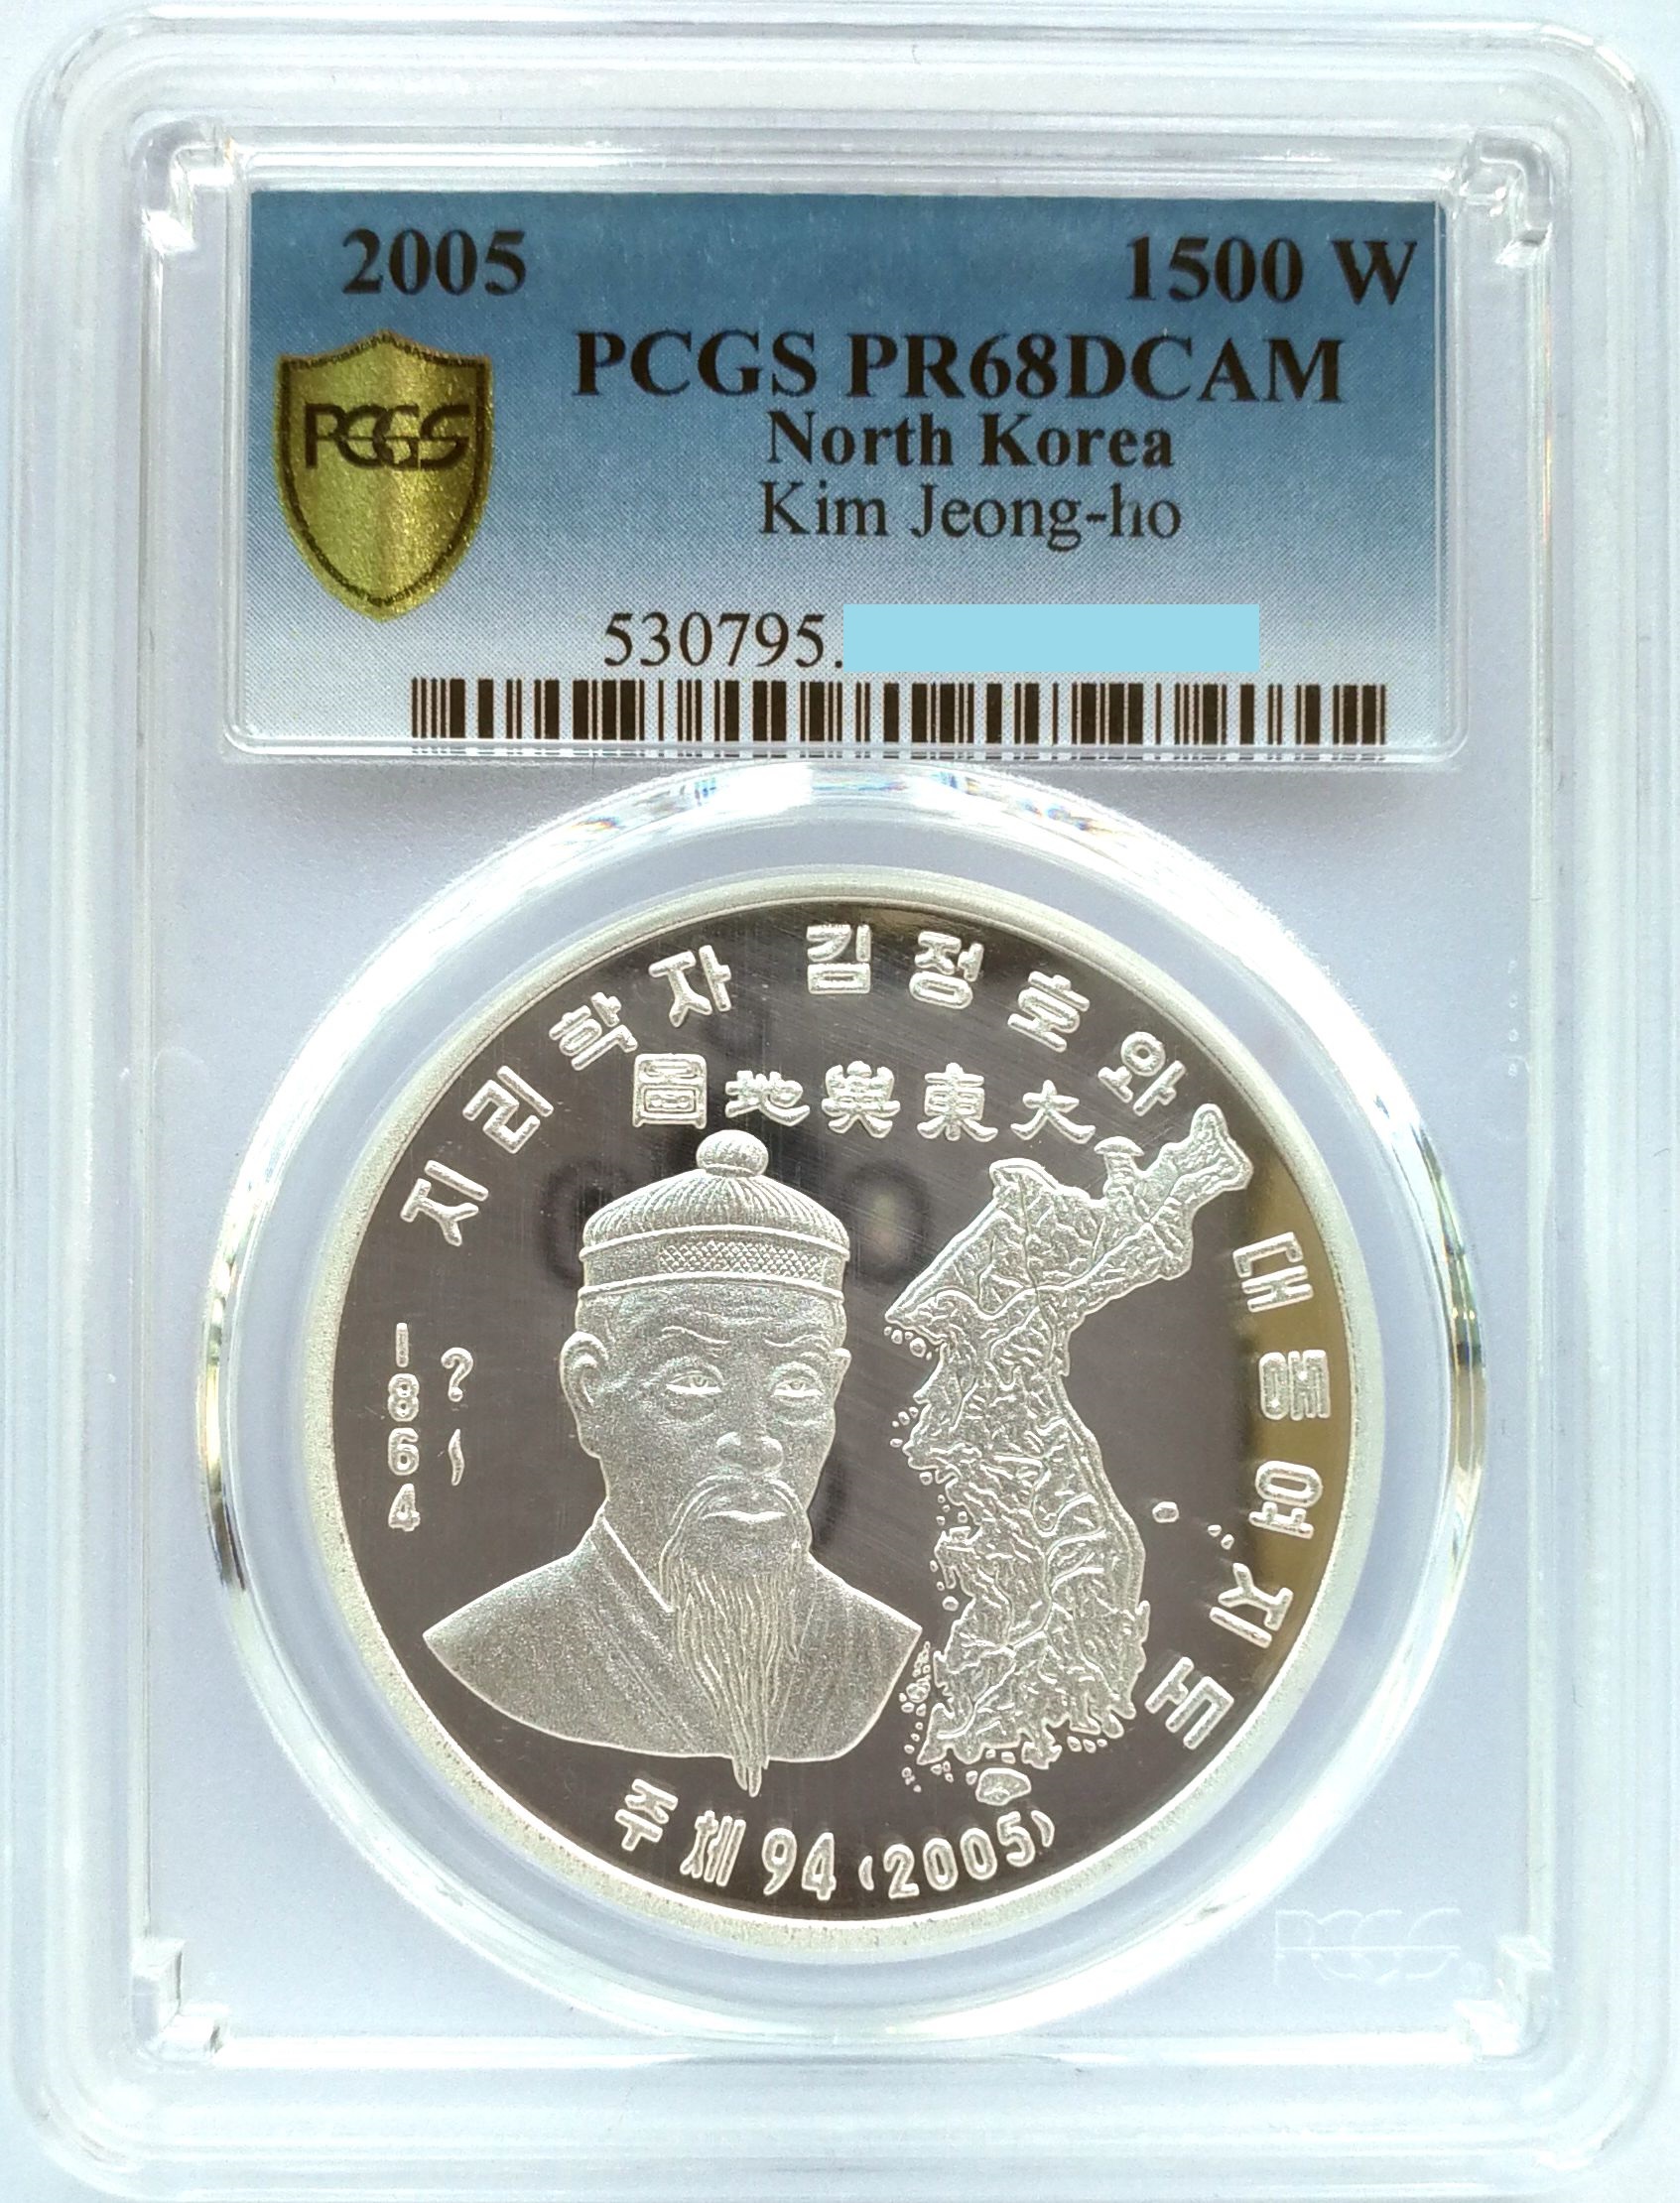 L3472, Korea "Kim Jeong-ho, Ancient Map" , 1 oz Silver Coin, 2005 PCGS68 DCAM